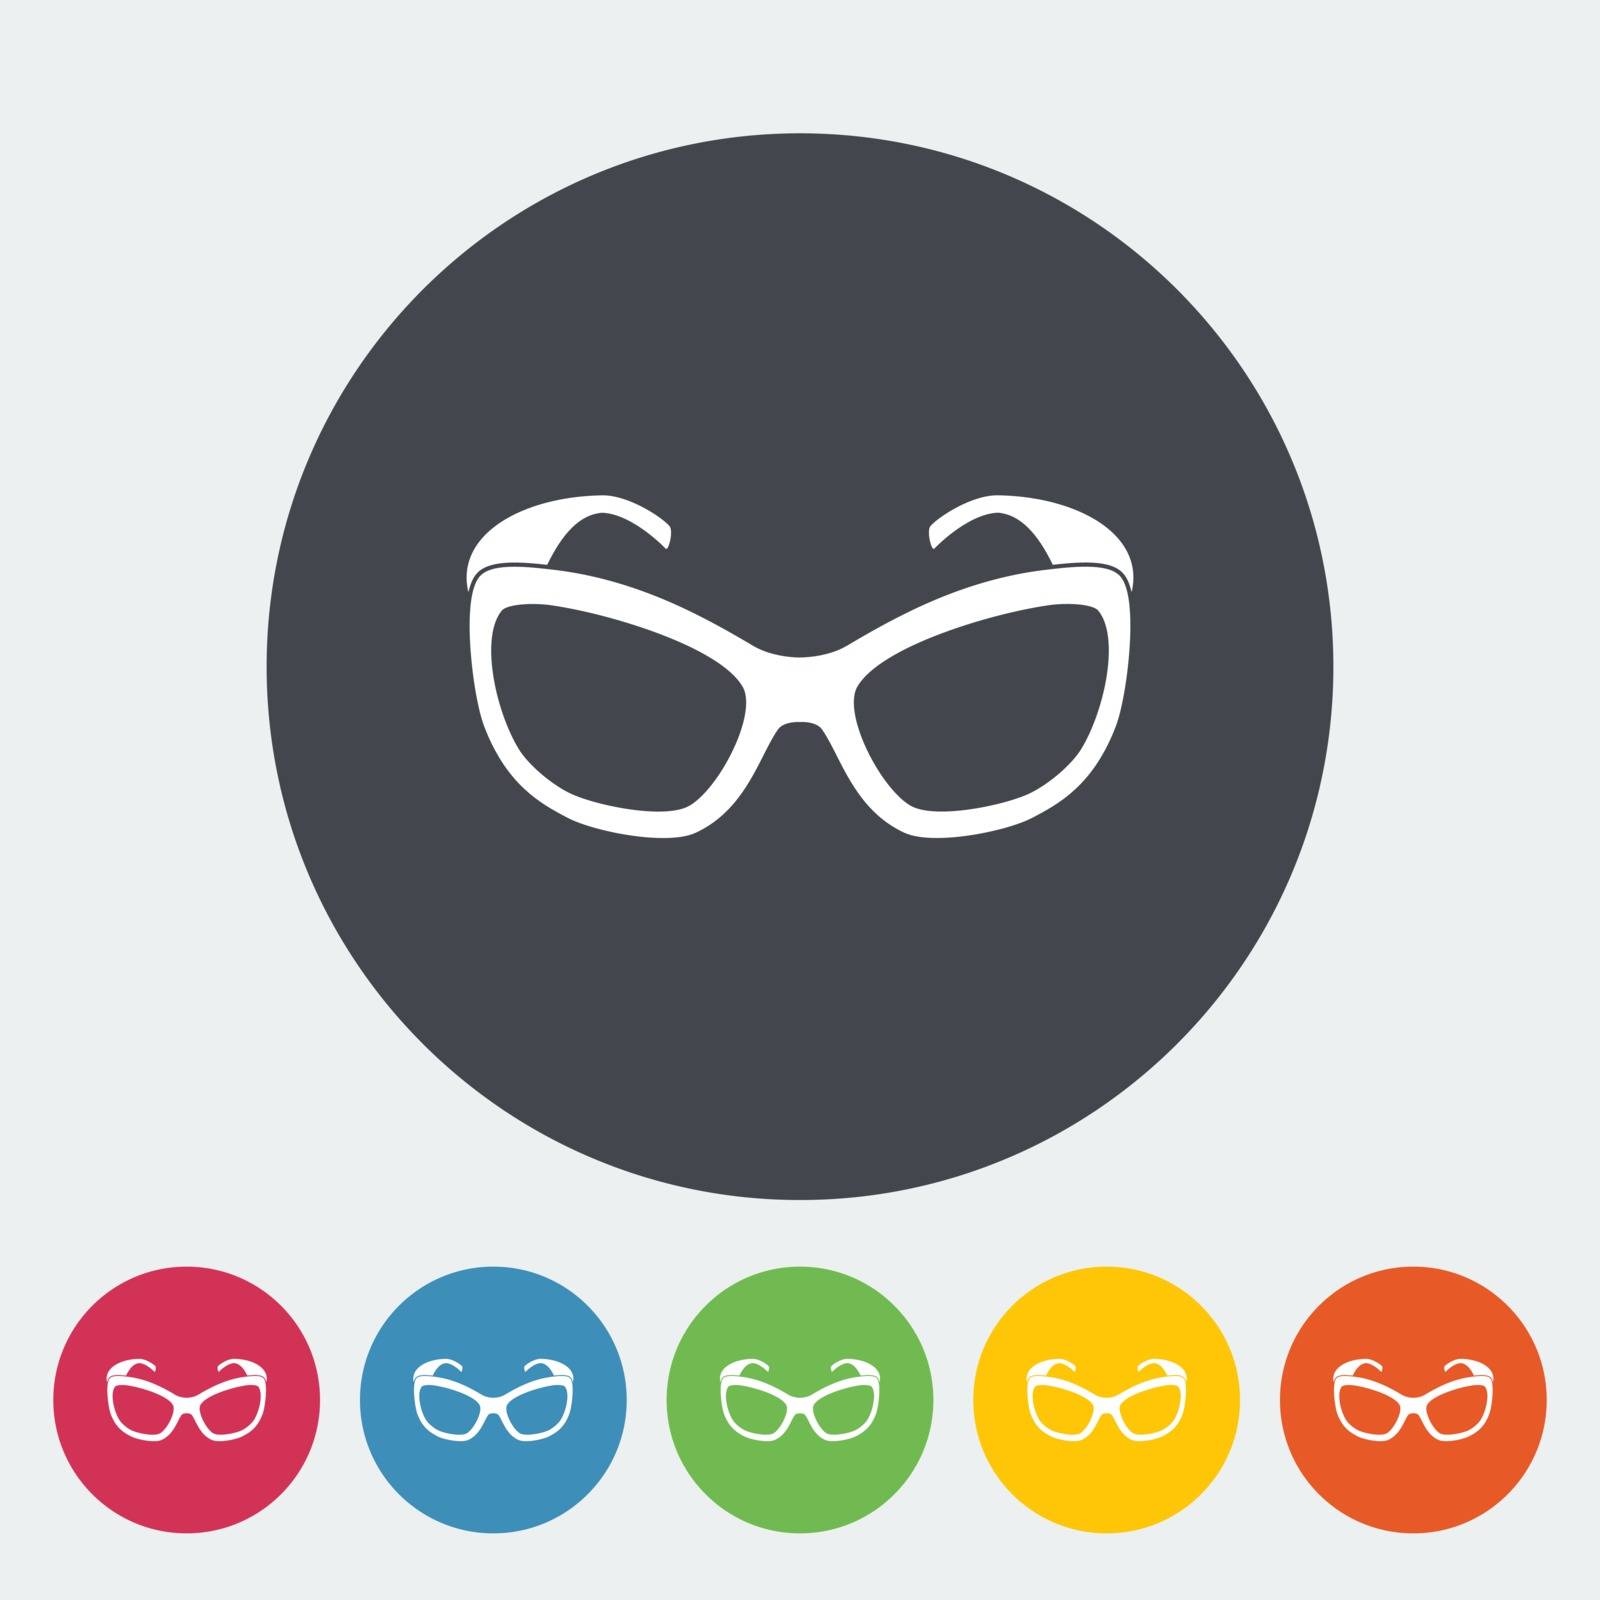 Sunglasses. Single flat icon on the circle. Vector illustration.